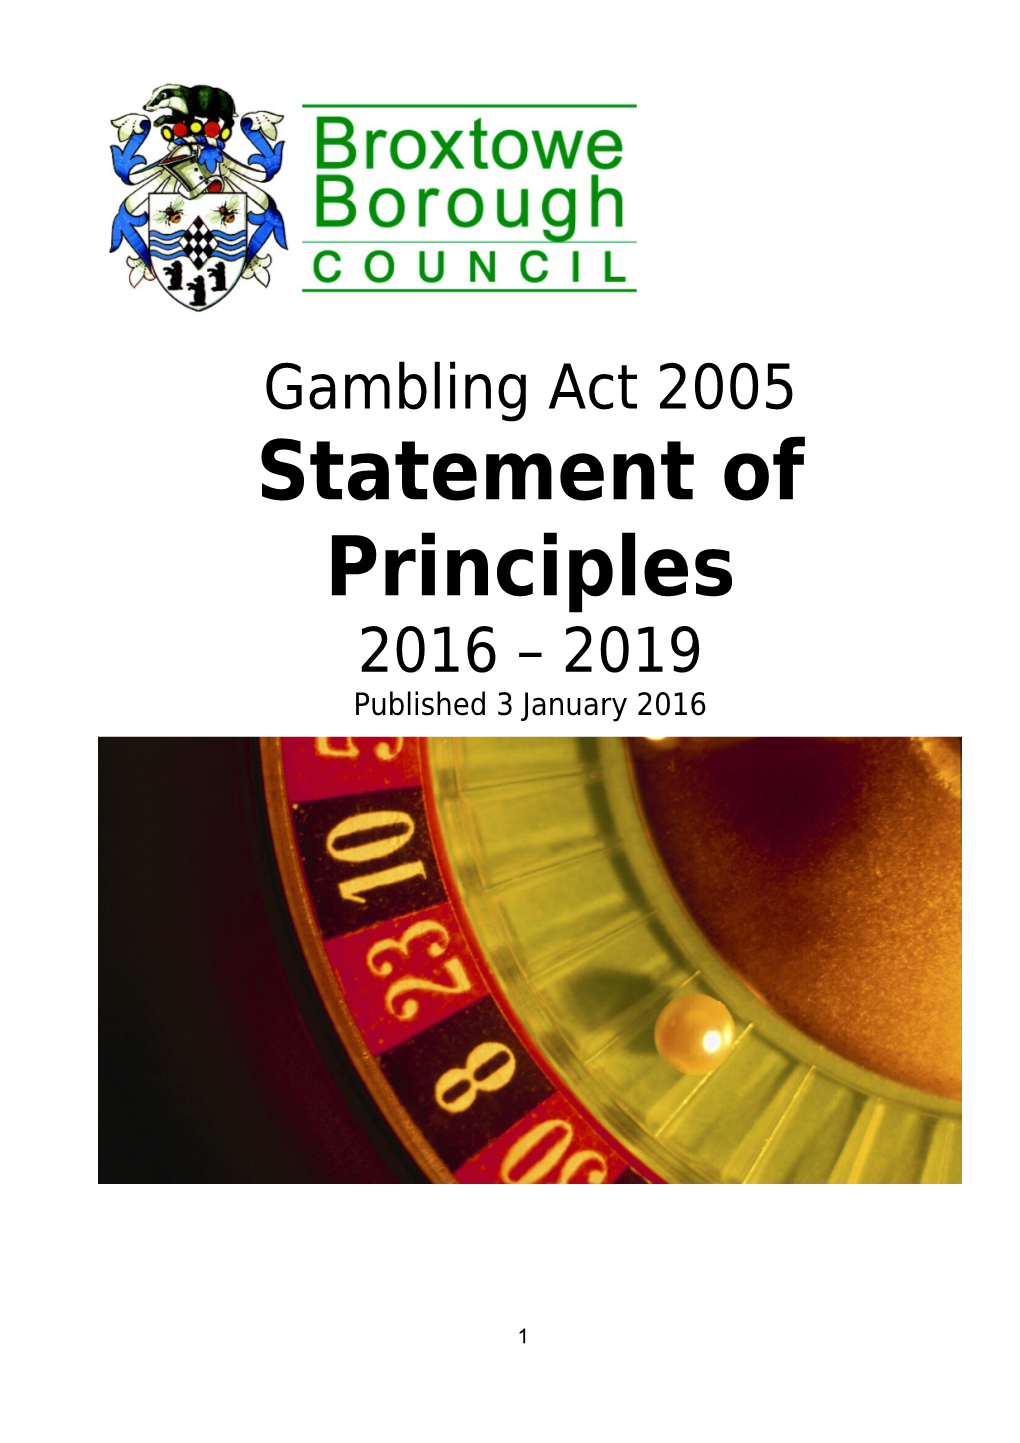 Gambling Statement of Licensing Principles